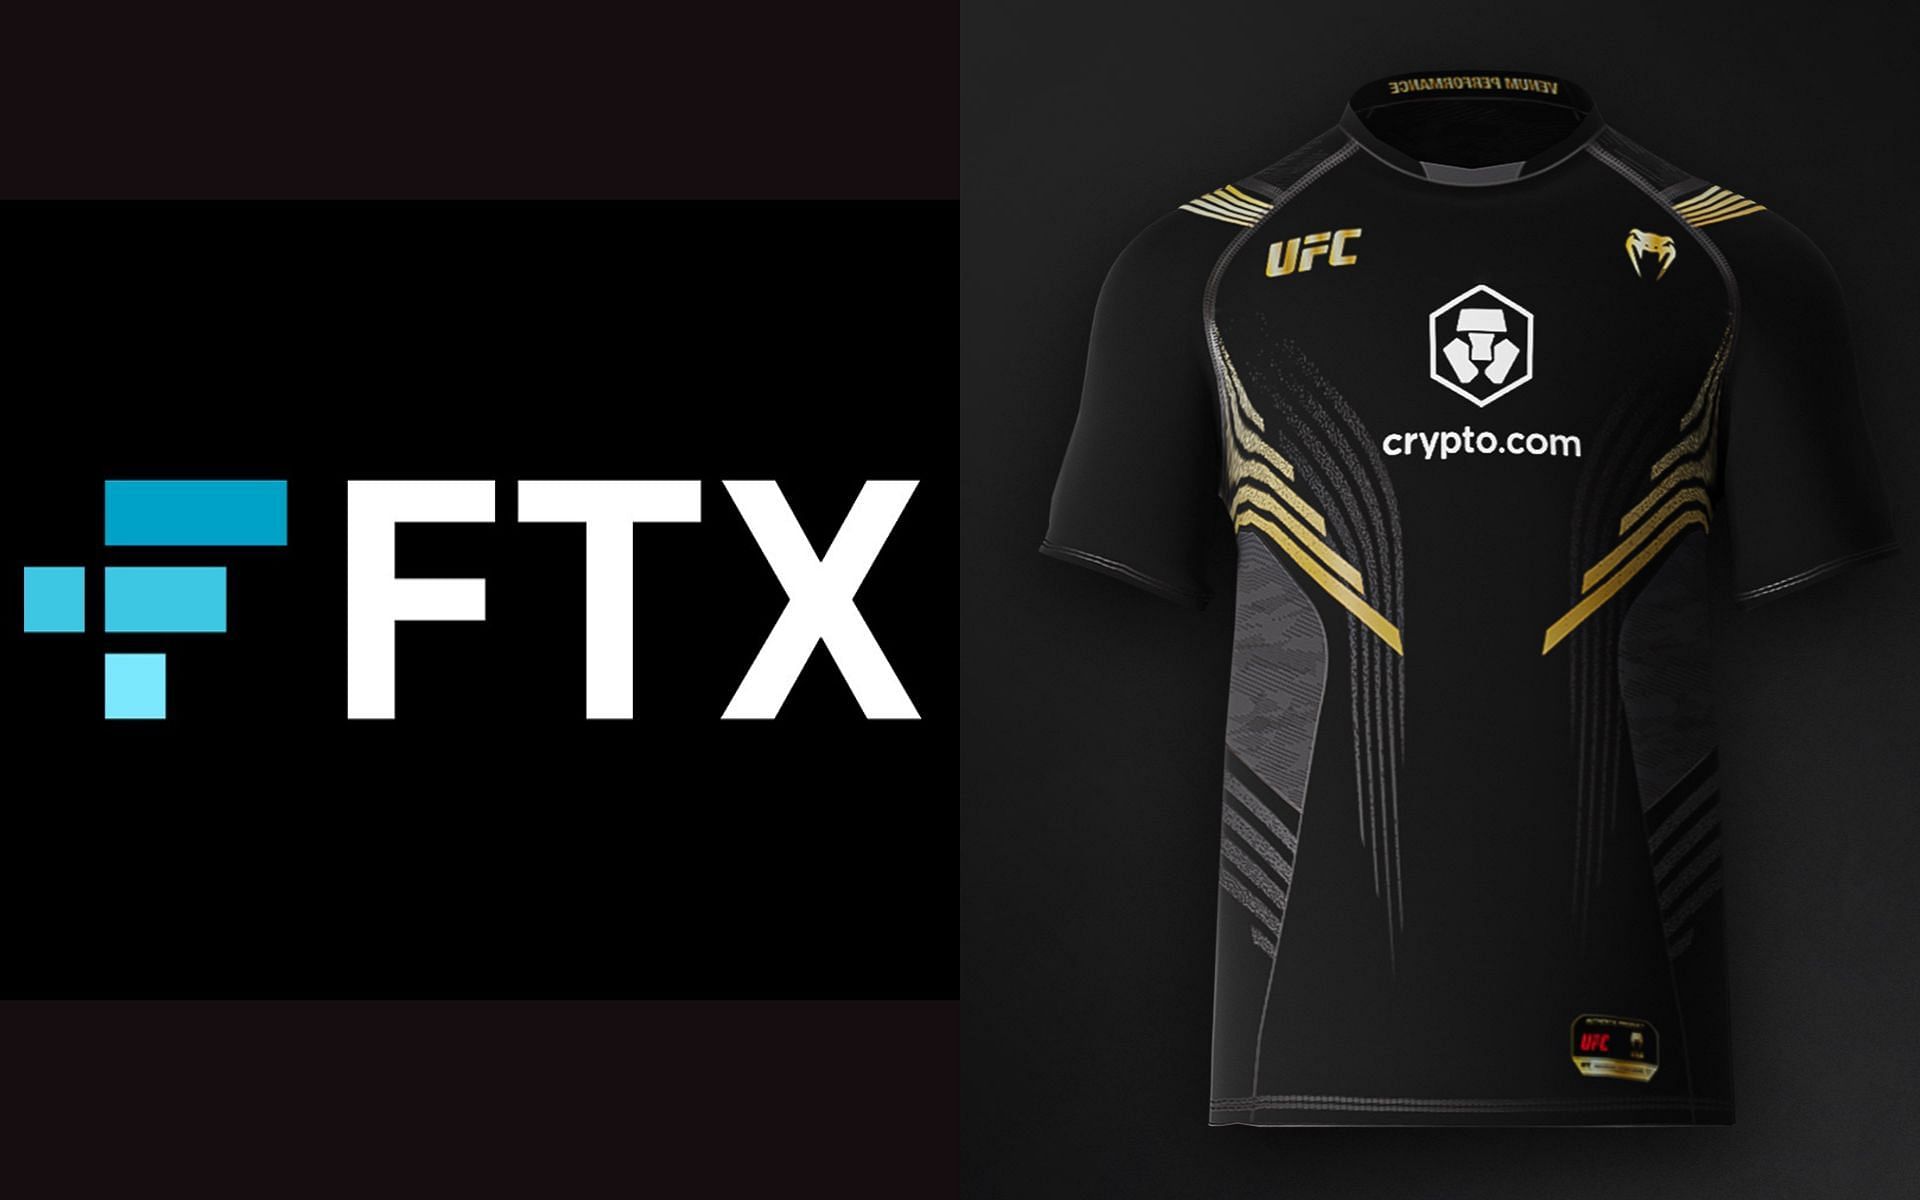 FTX logo [Left] Crypto.com logo on UFC fighter kit [Right]